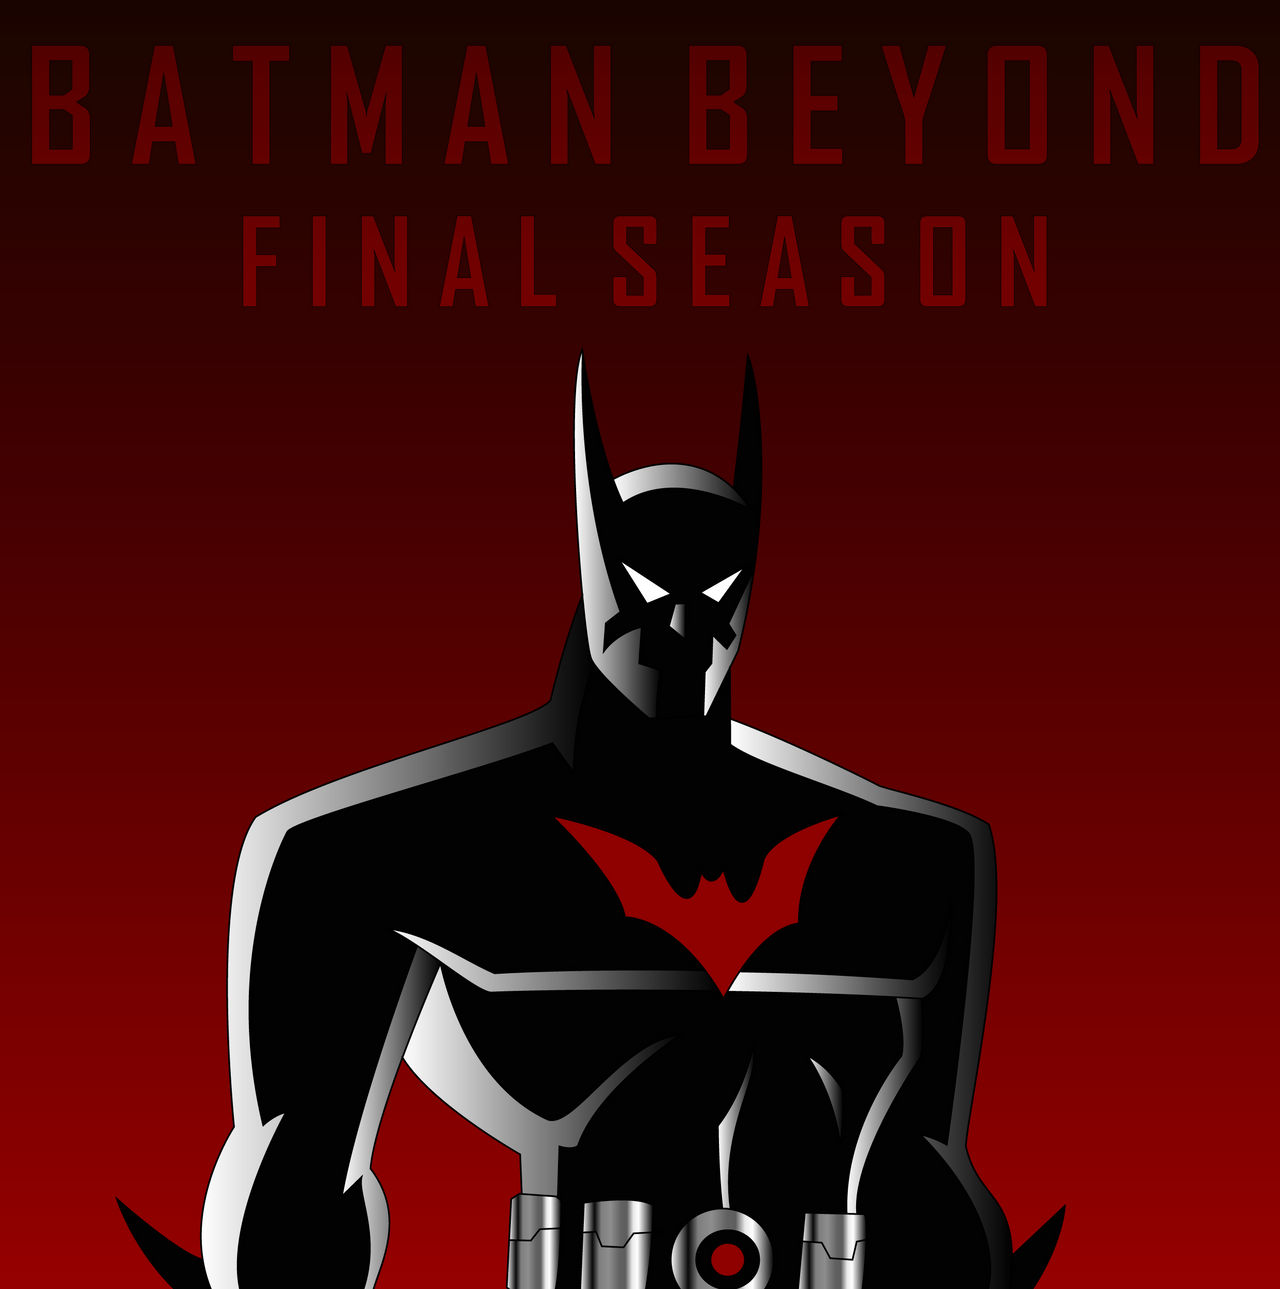 Batman Beyond Final Season by DOMREP1 on DeviantArt